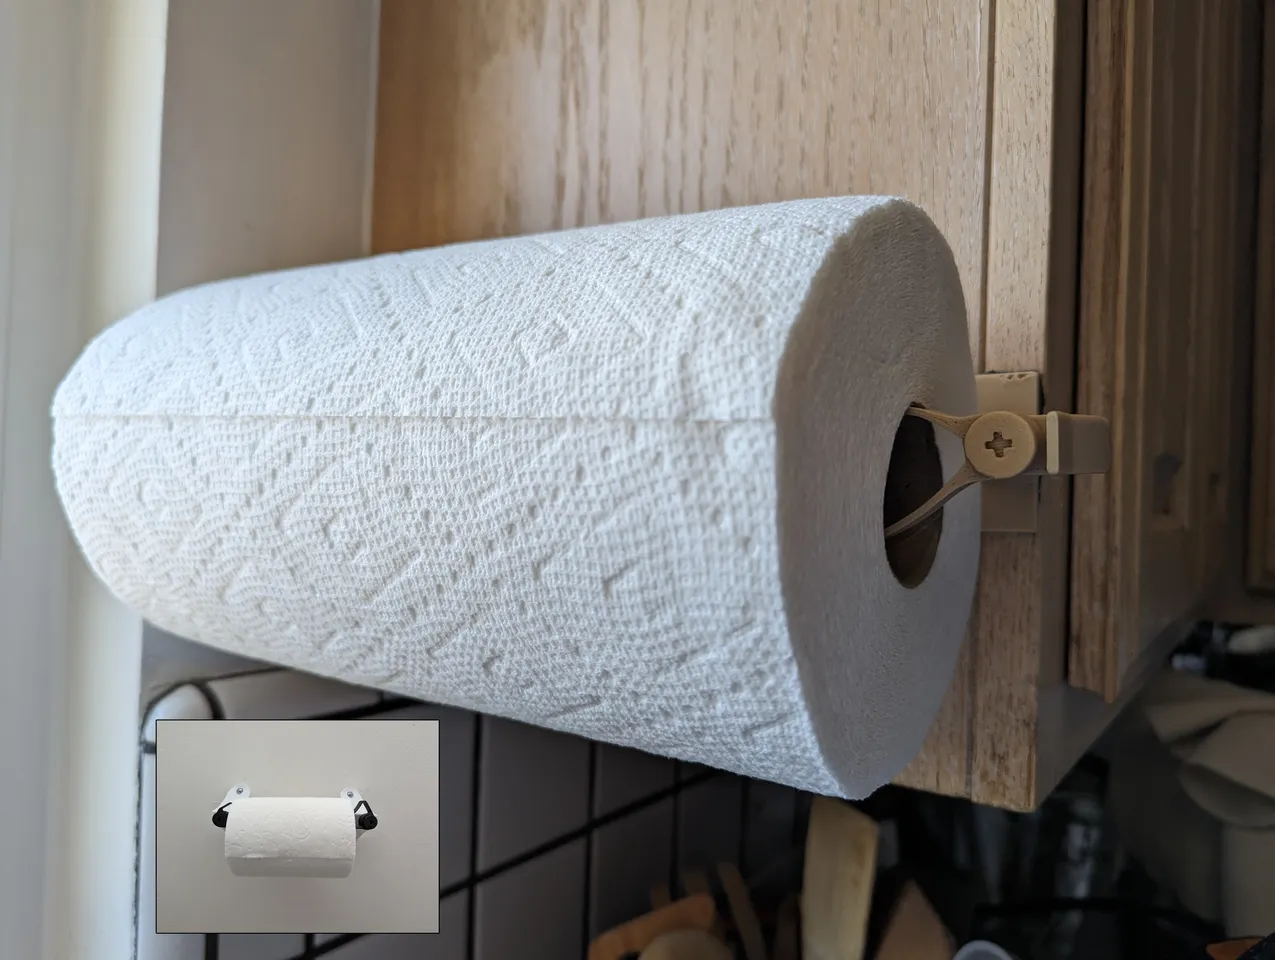 15 Nifty Ways to Store Toilet Paper  Toilet paper storage, Toilet paper,  Diy toilet paper holder